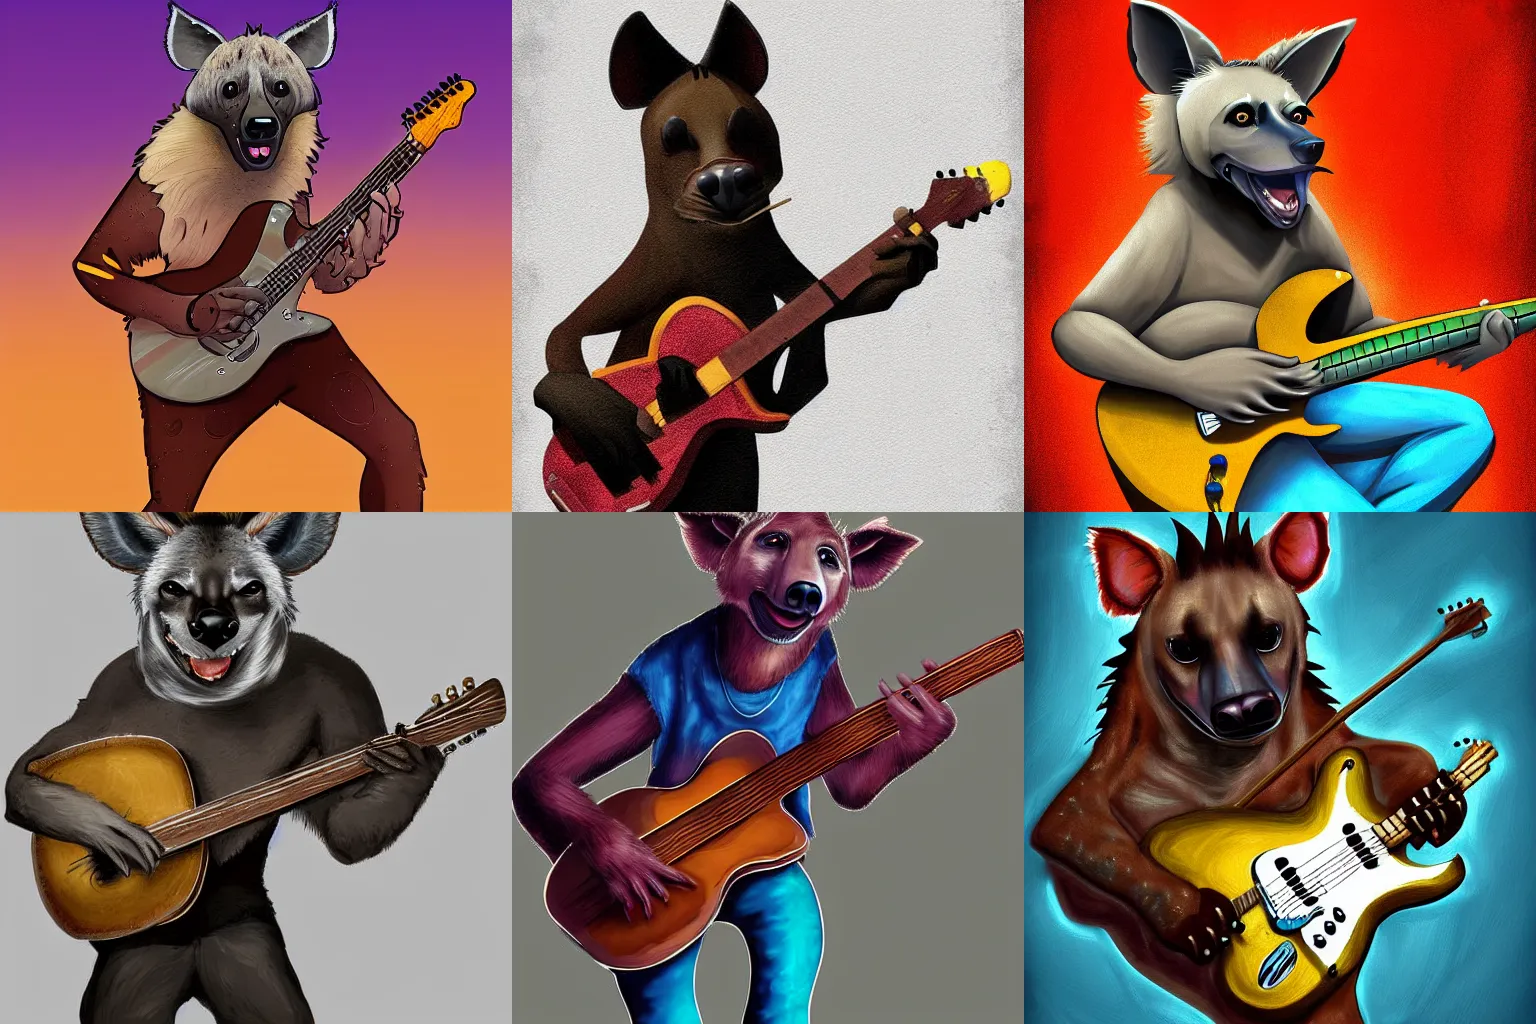 Prompt: A digital painting of an anthropomorphic hyena playing guitar, digital art trending on Artstation